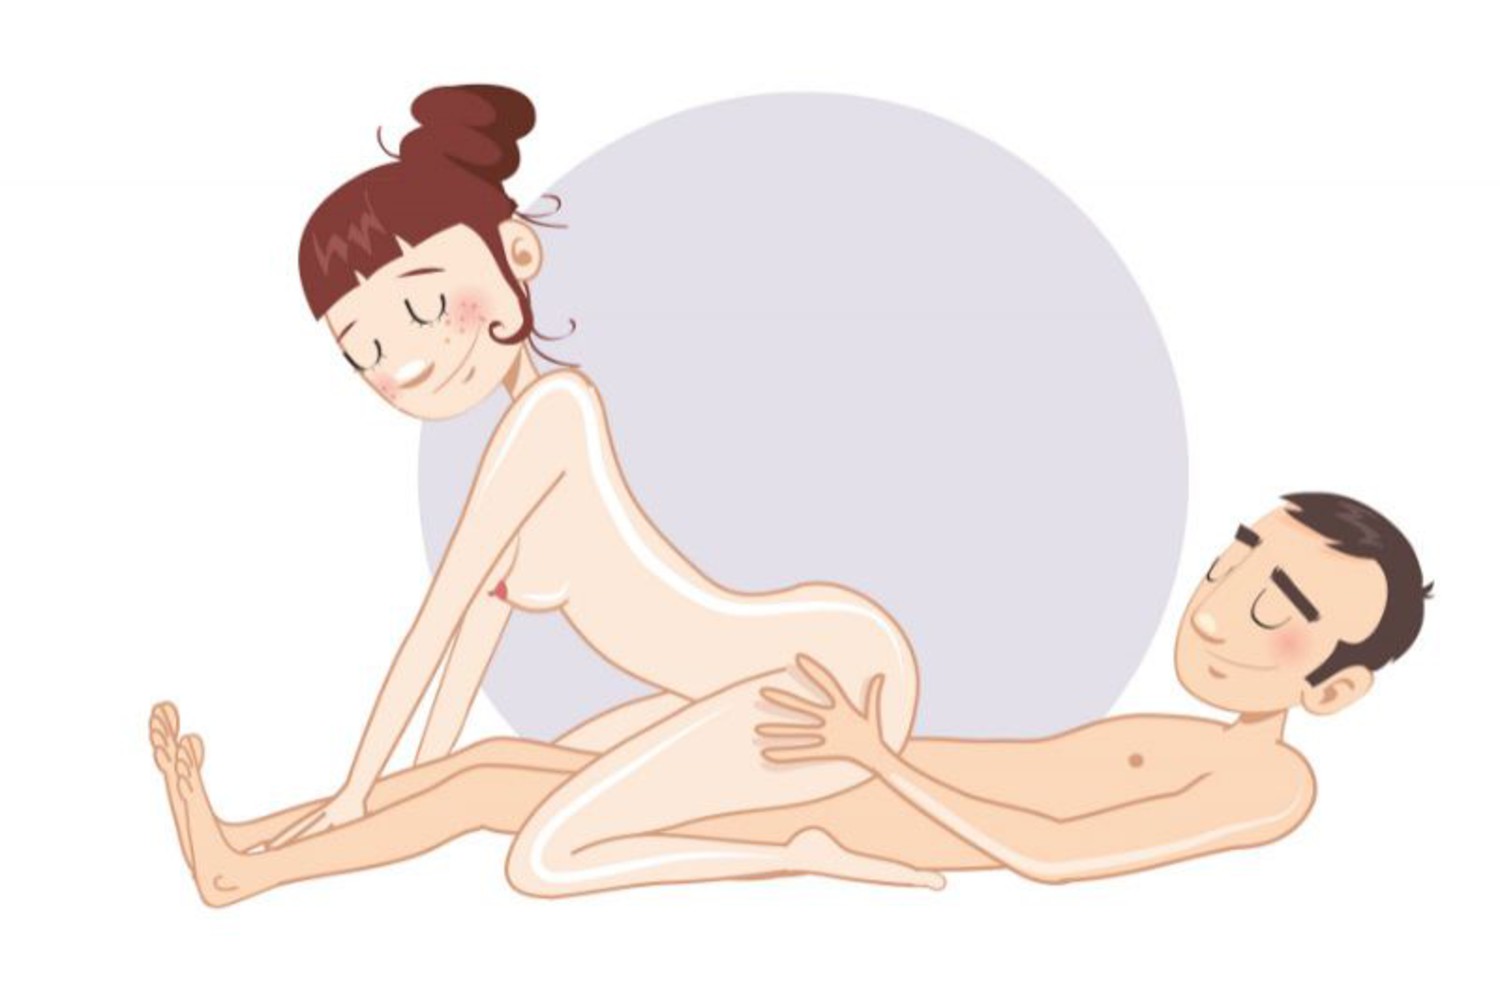 Man nude position sex woman